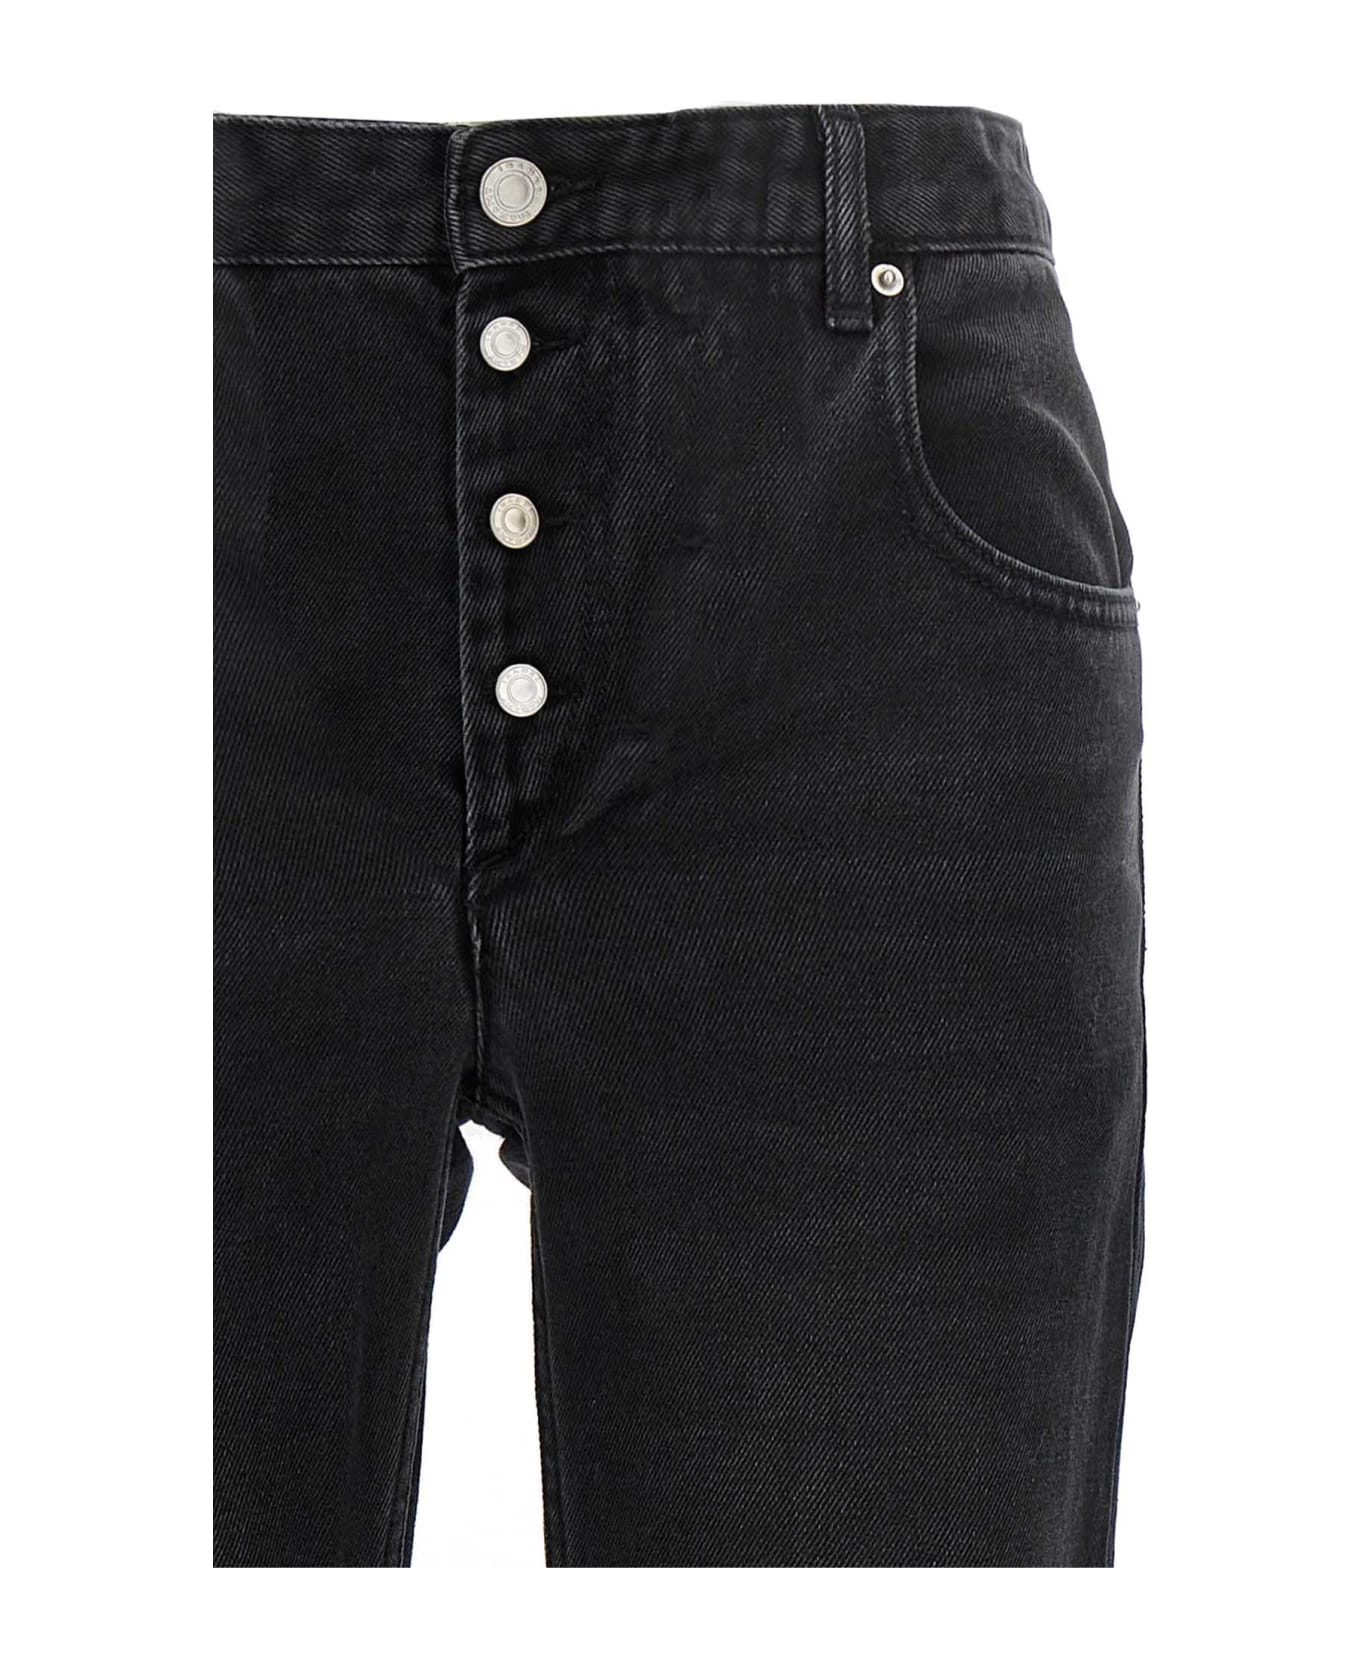 Isabel Marant Jemina High Waist Jeans - FADED BLACK デニム